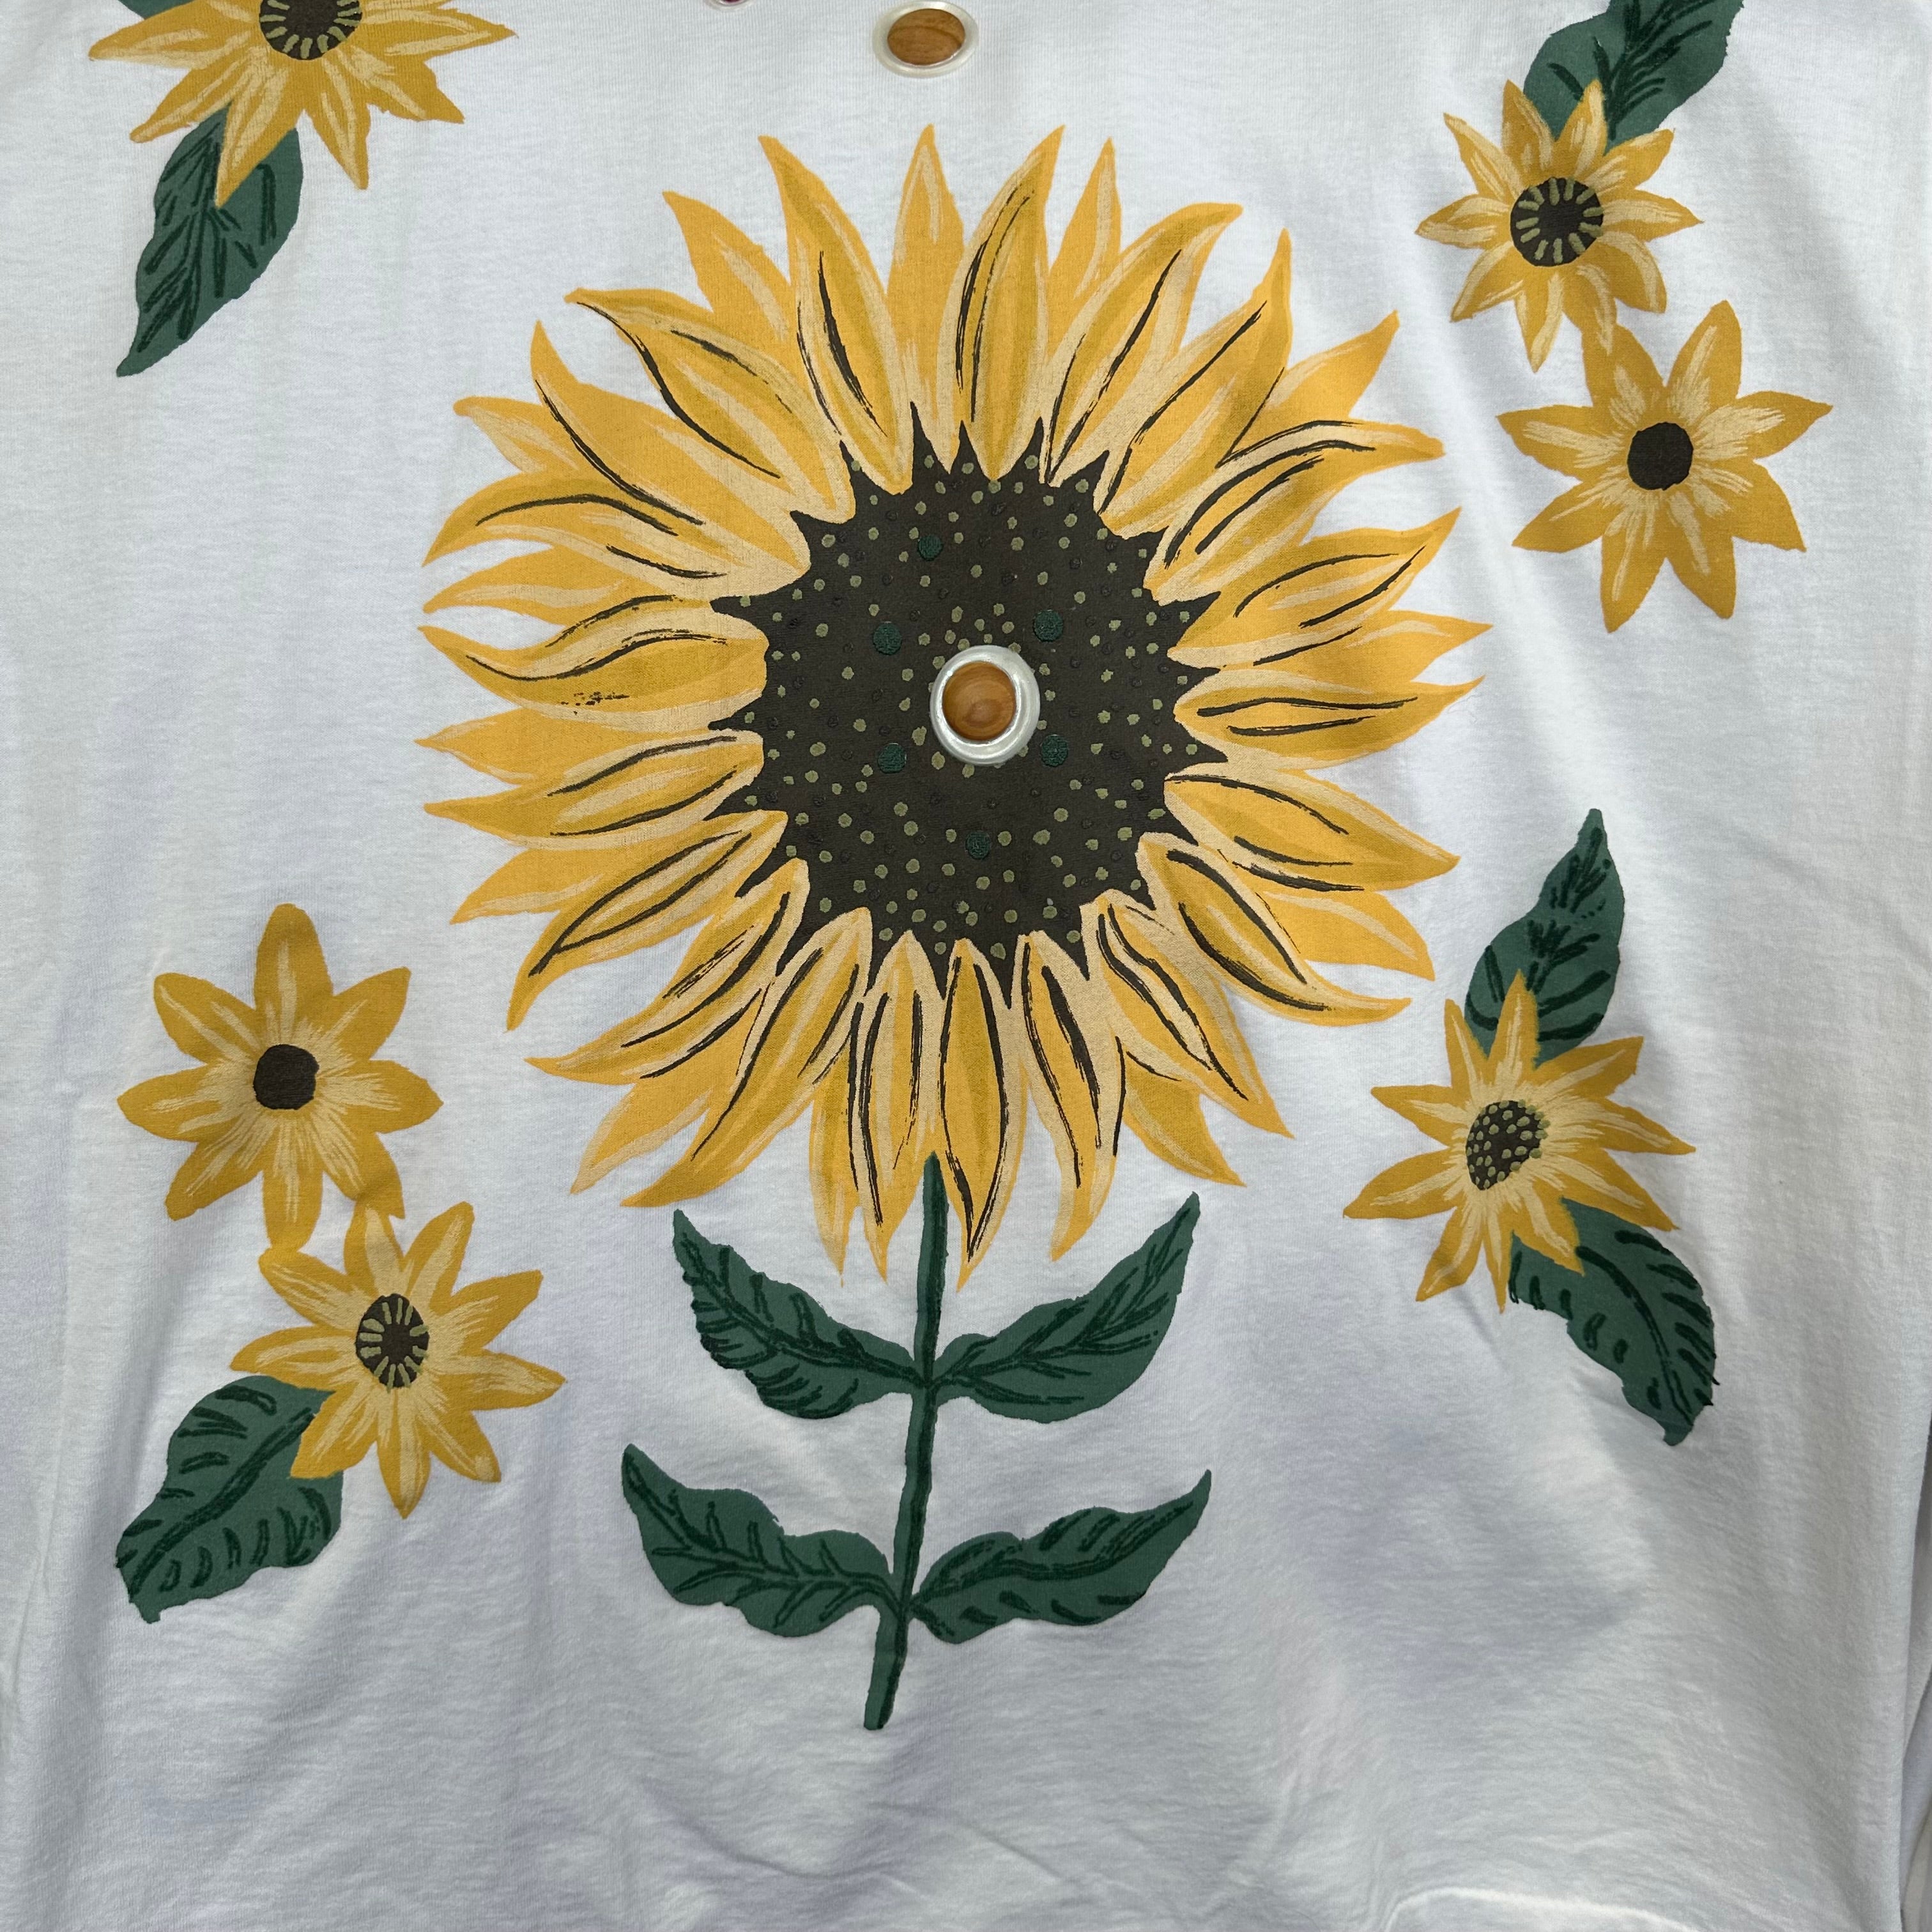 Painted Sunflowers T-Shirt